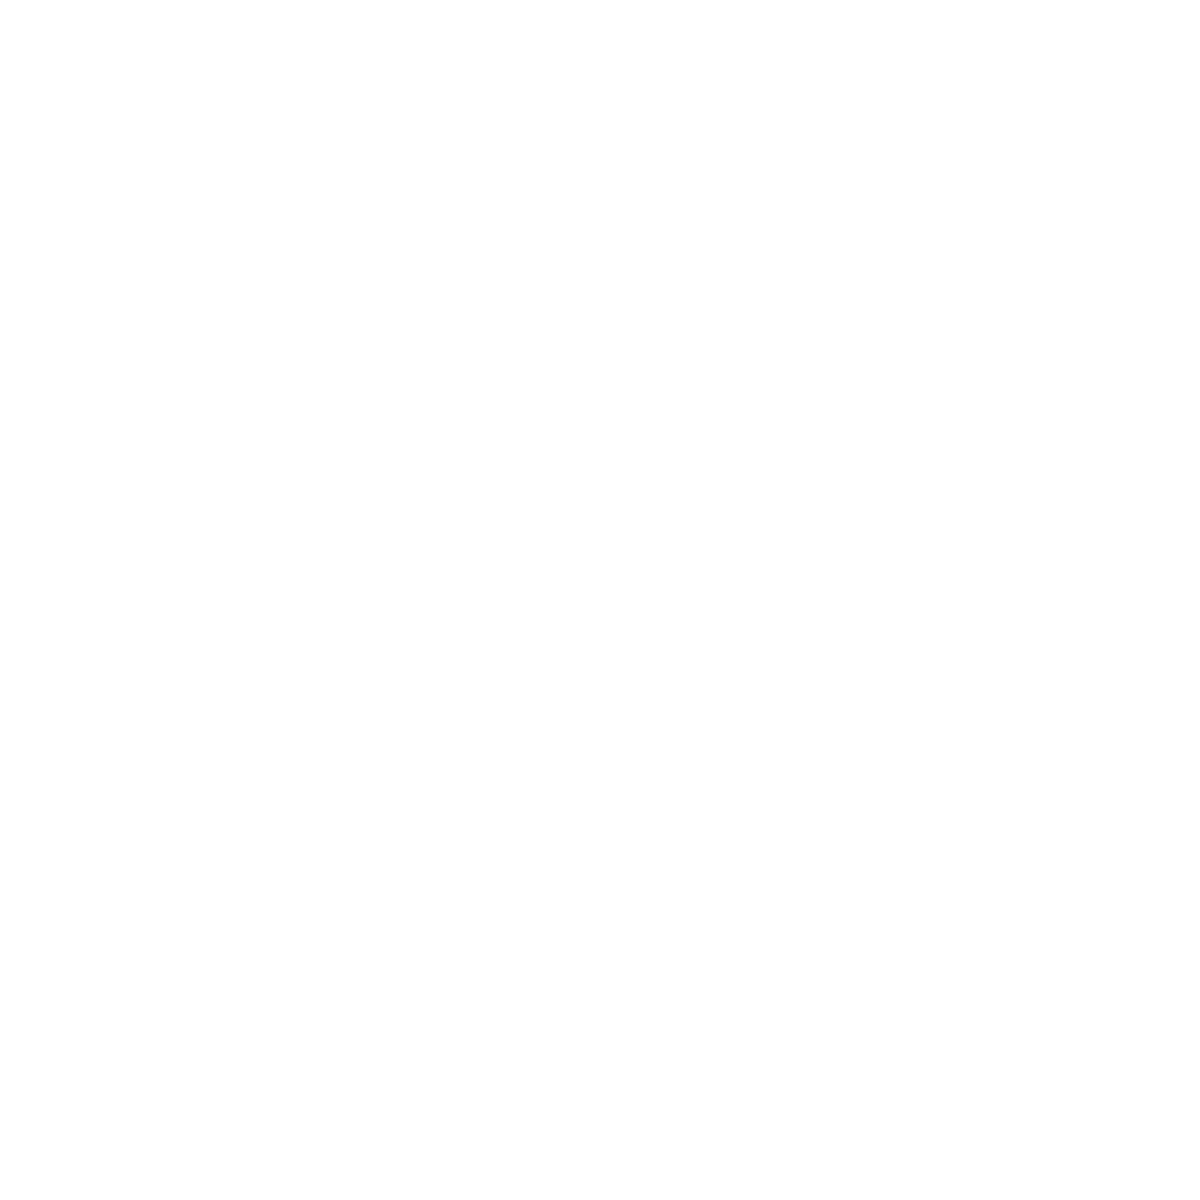 NASC badge icon for CBD industry companies